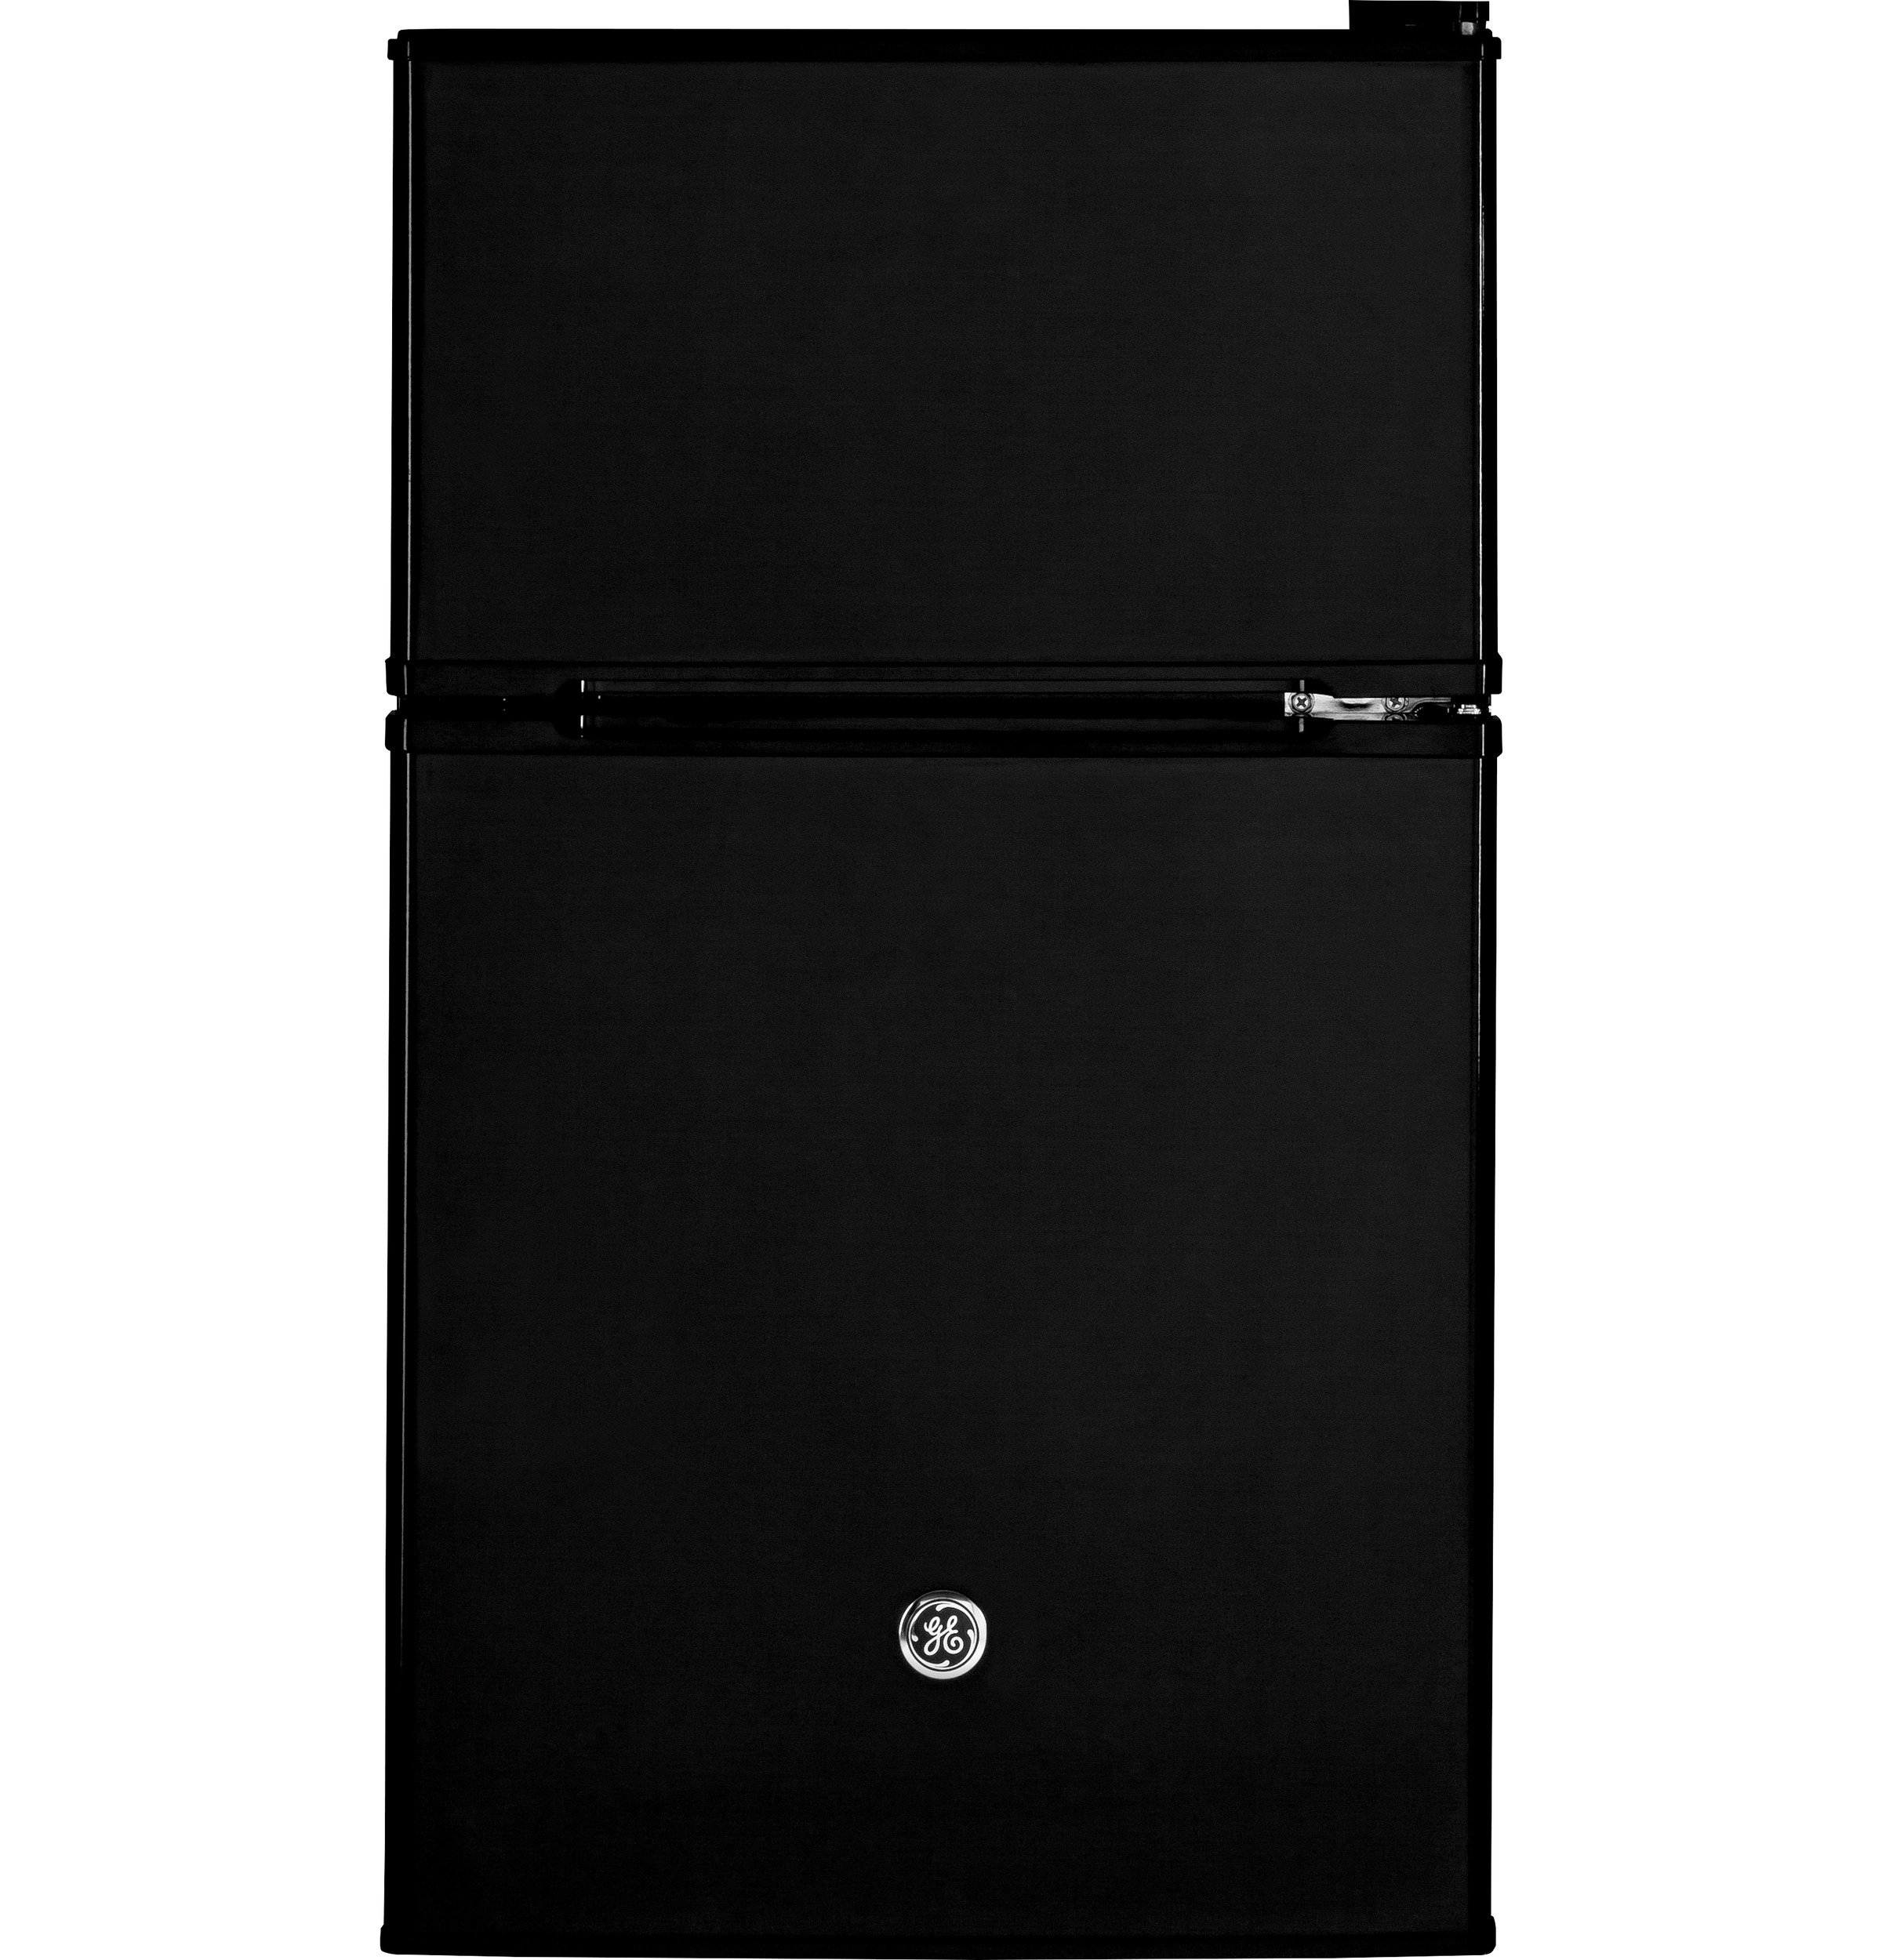 Ge Gde03gk 19" Wide 3.1 Cu. Ft. Energy Star Rated Freestanding Refrigerator - Black - image 1 of 4